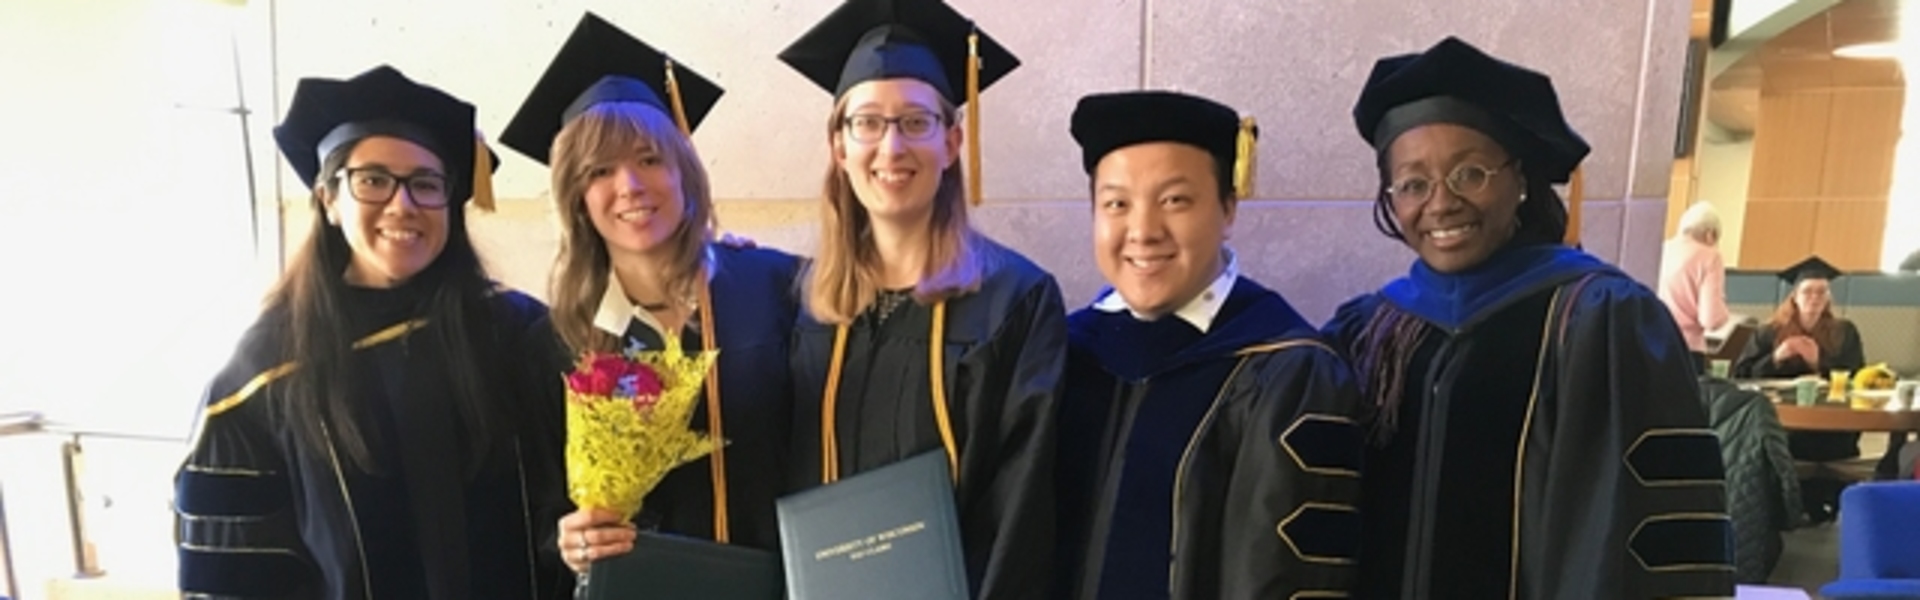 The two newest graduates of the Women's Studies program.